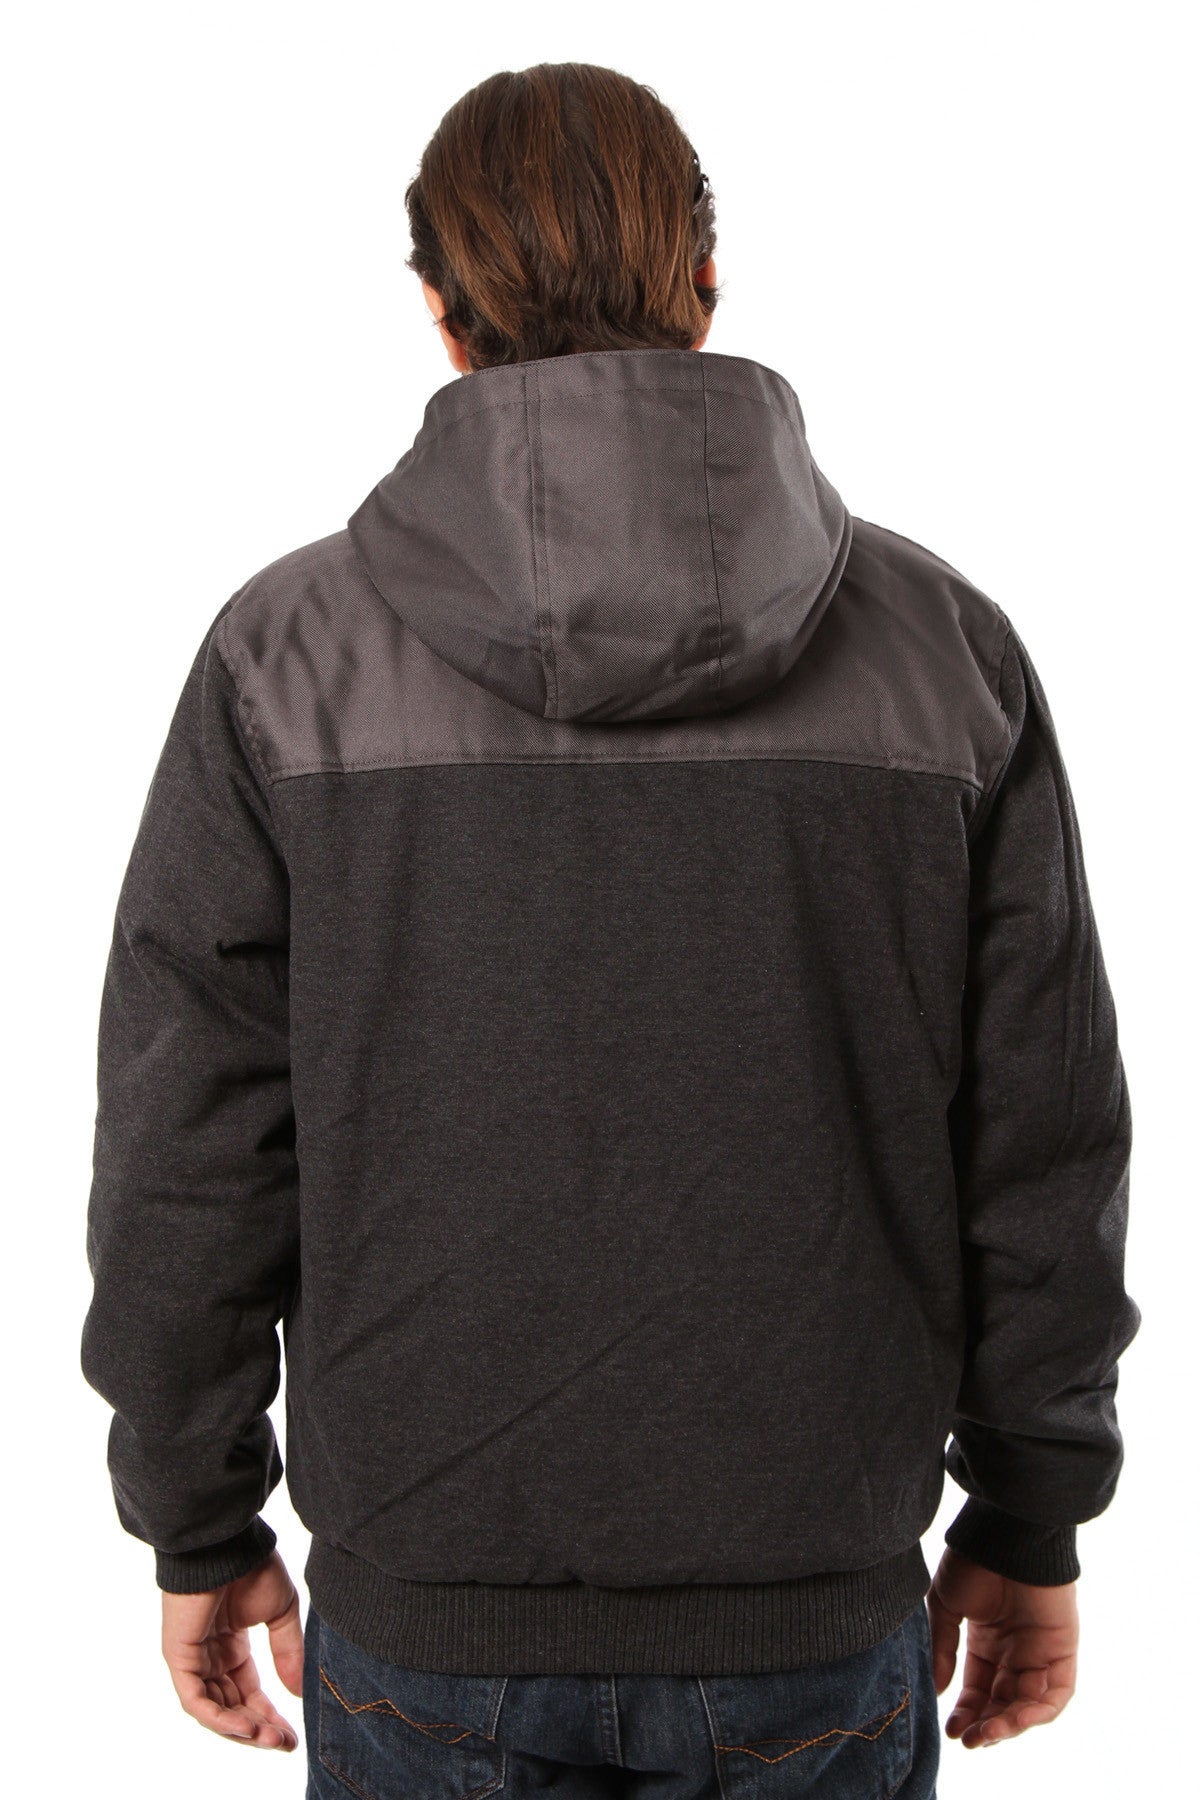 Oakland Athletics Reversible Fleece Jacket